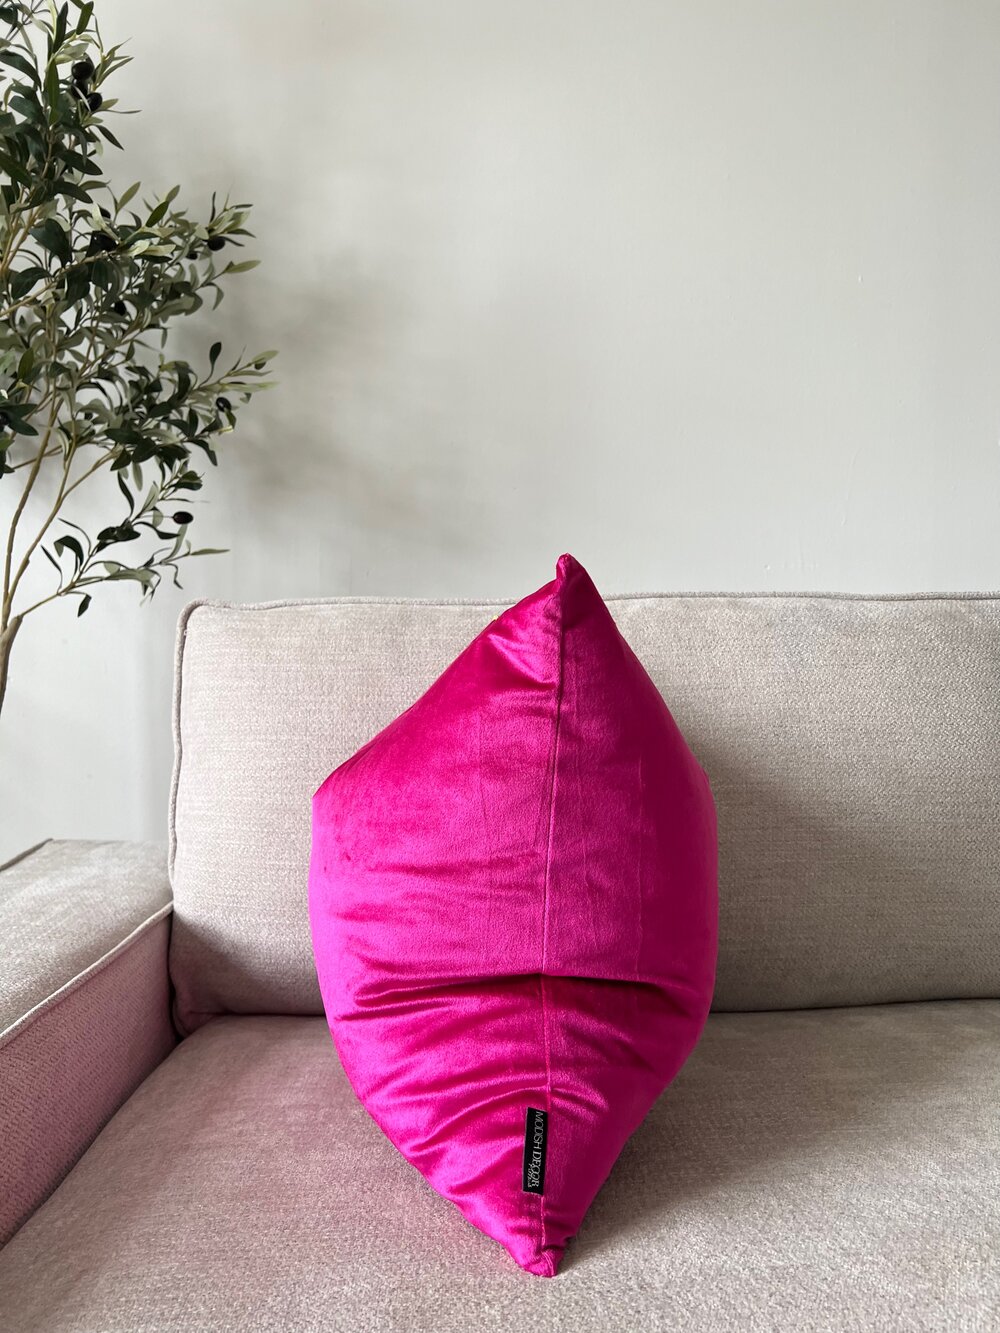 Flesh Pink Velvet Cushion Cover Pillow Case Soft Throw Pillow